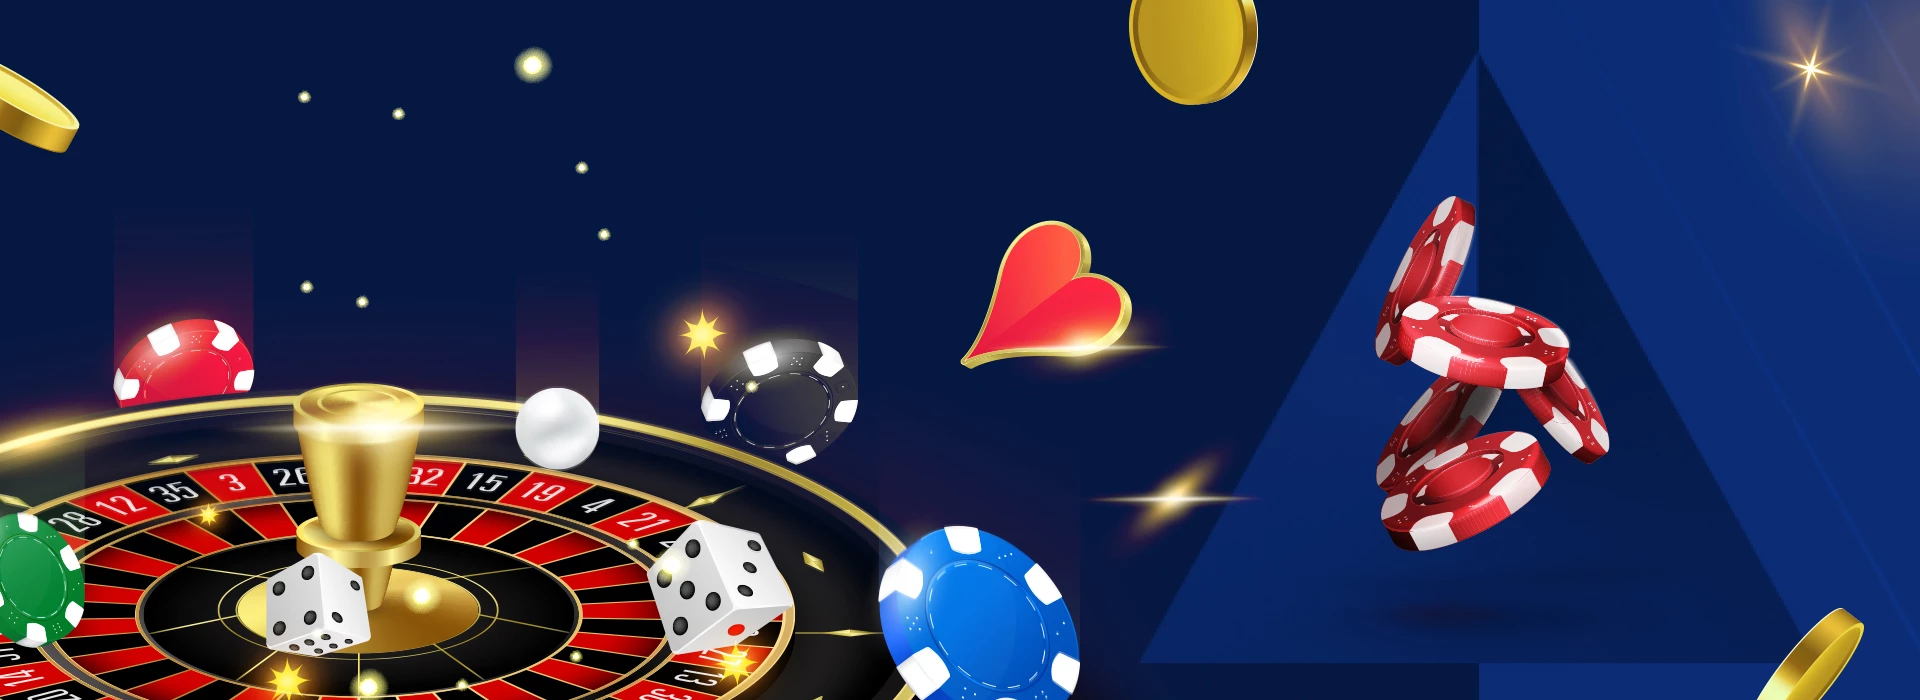 casino online roulette spellen design image CasinoGenie